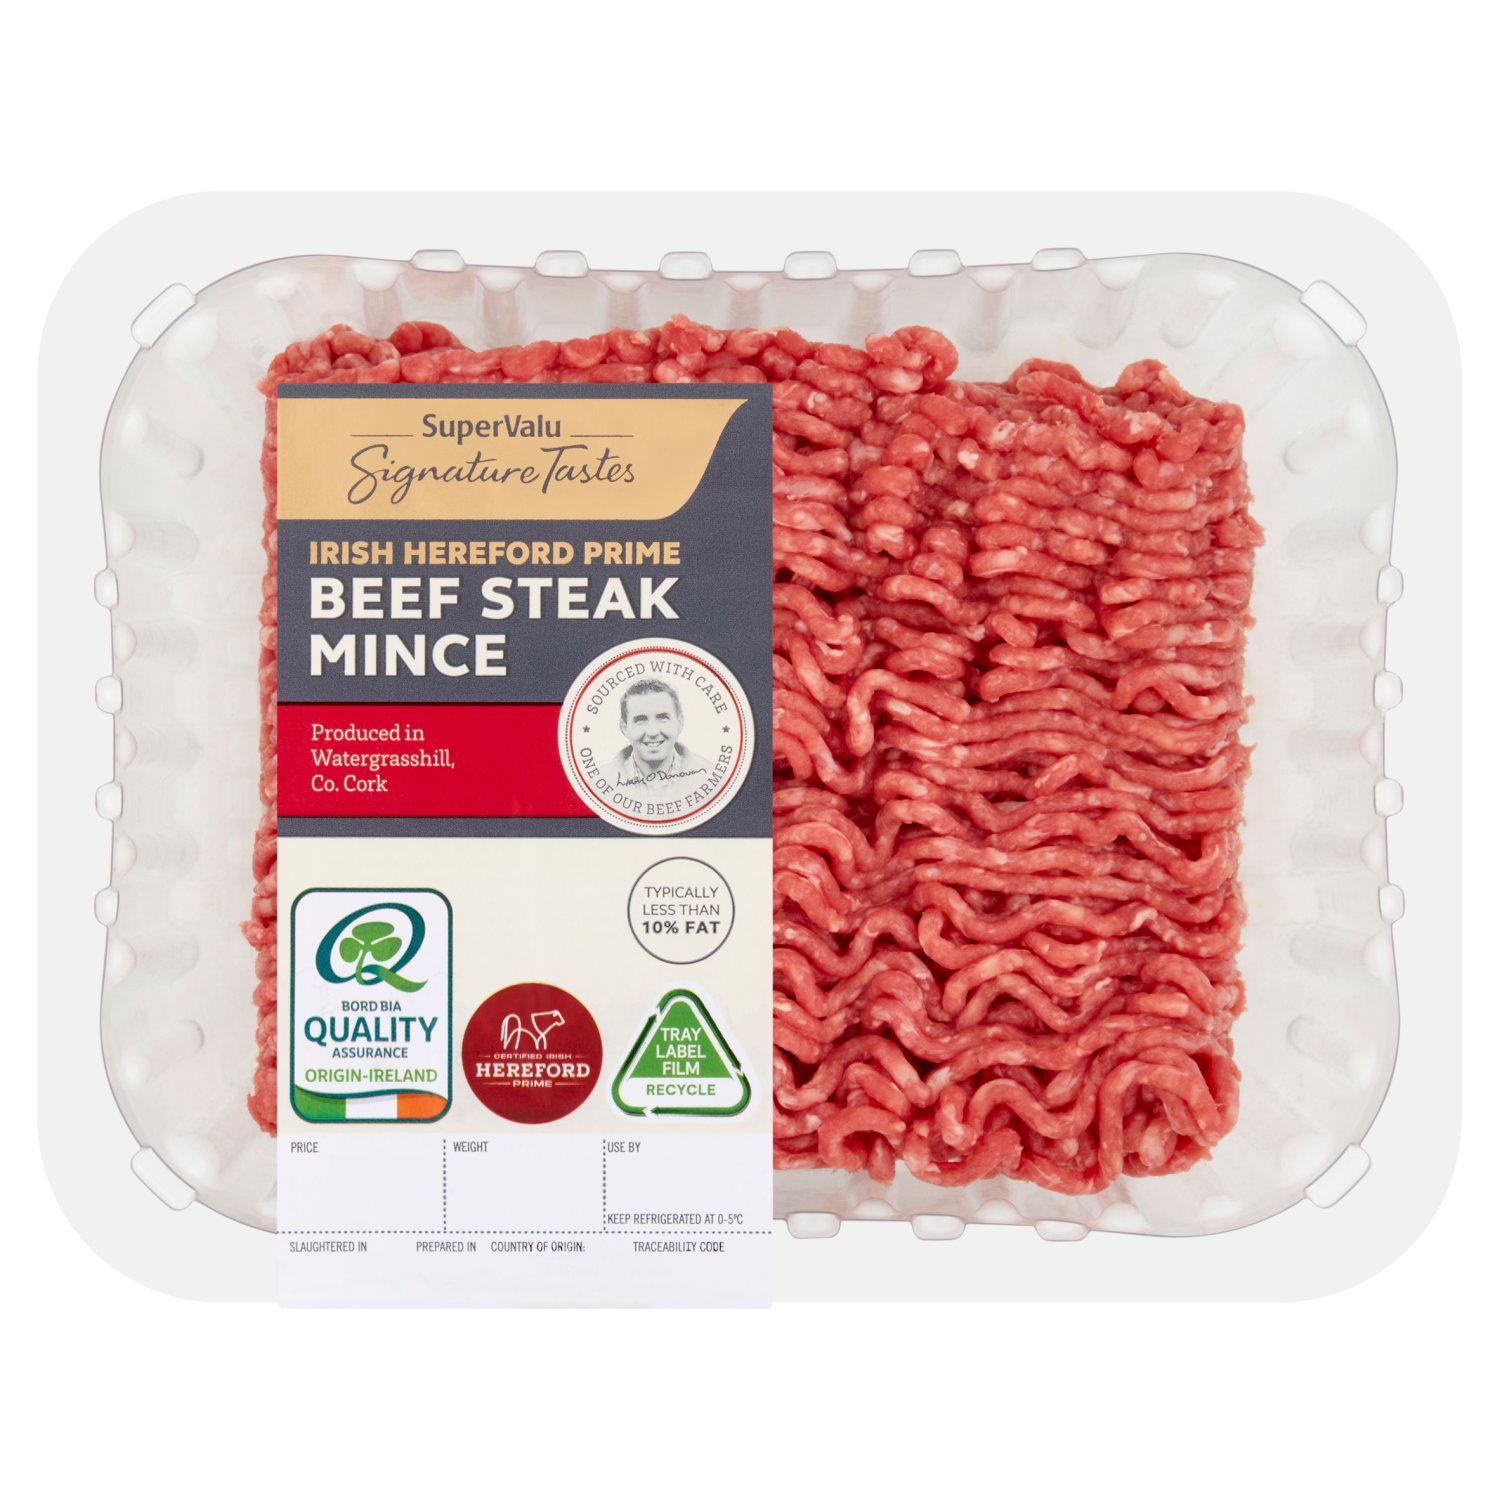 Signature Tastes Irish Hereford Beef Steak Mince (454 g)